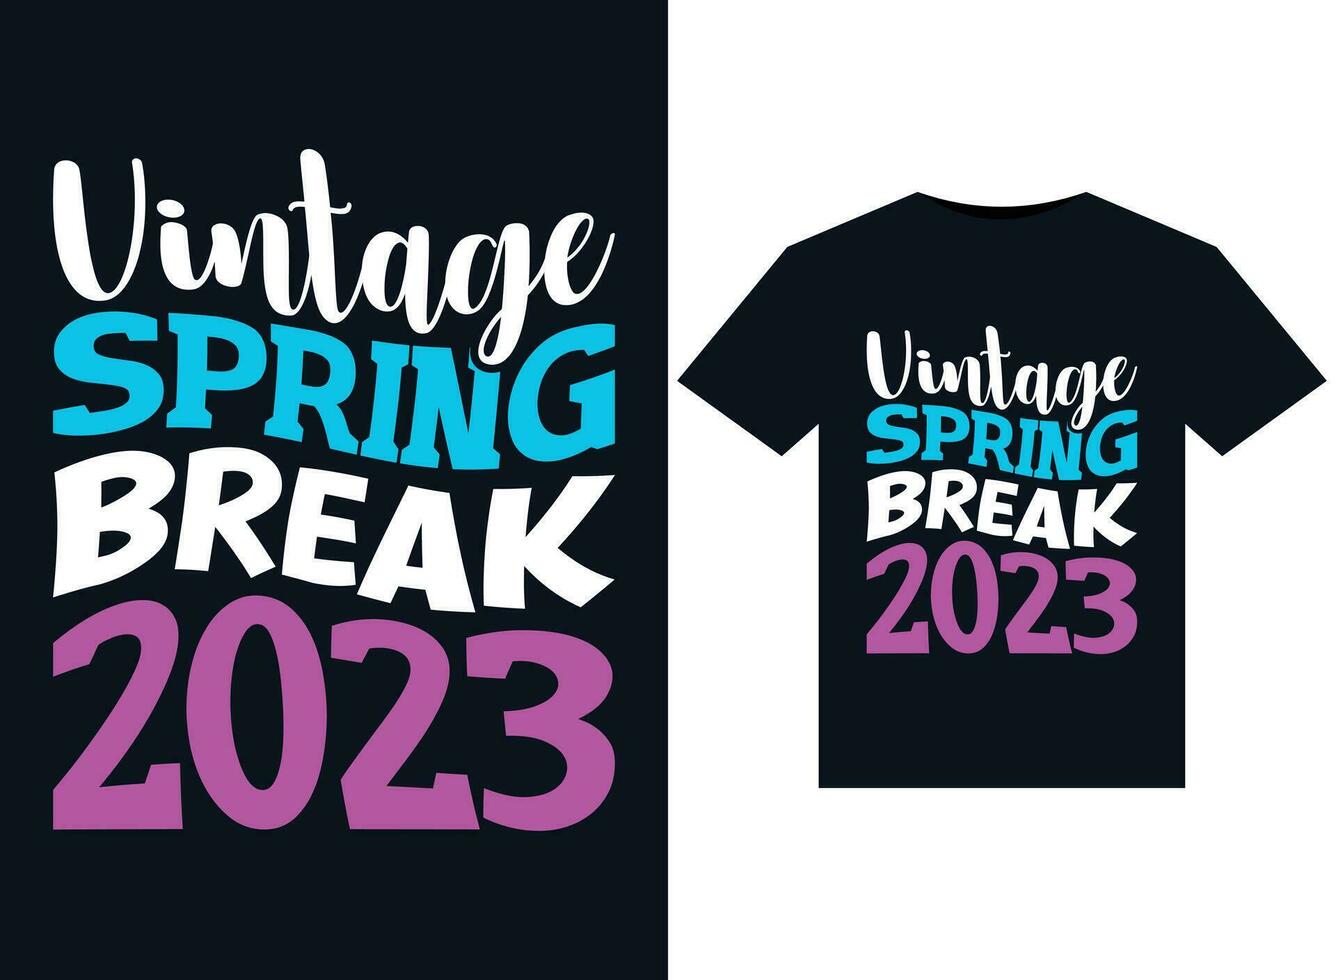 Vintage Spring Break 2023 illustrations for print-ready T-Shirts design vector